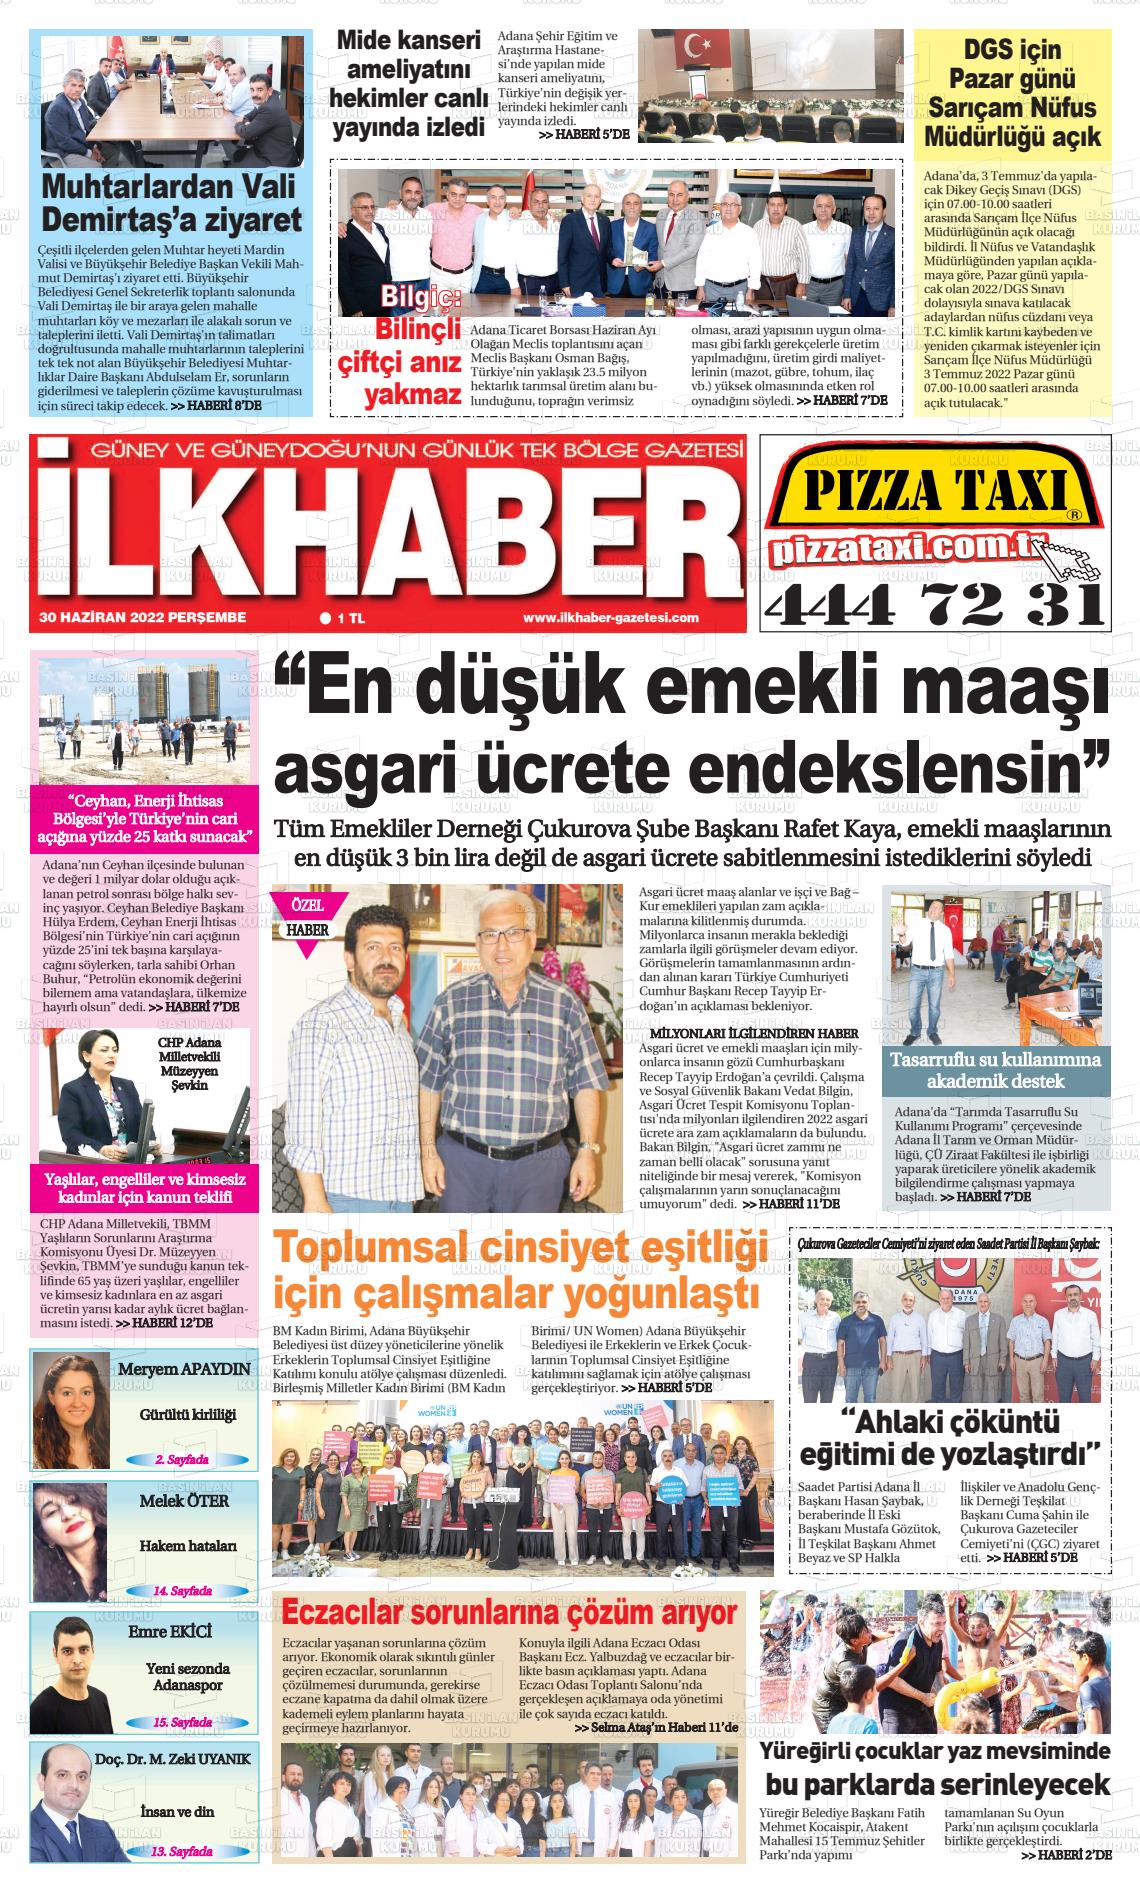 30 Haziran 2022 İlk Haber Gazete Manşeti